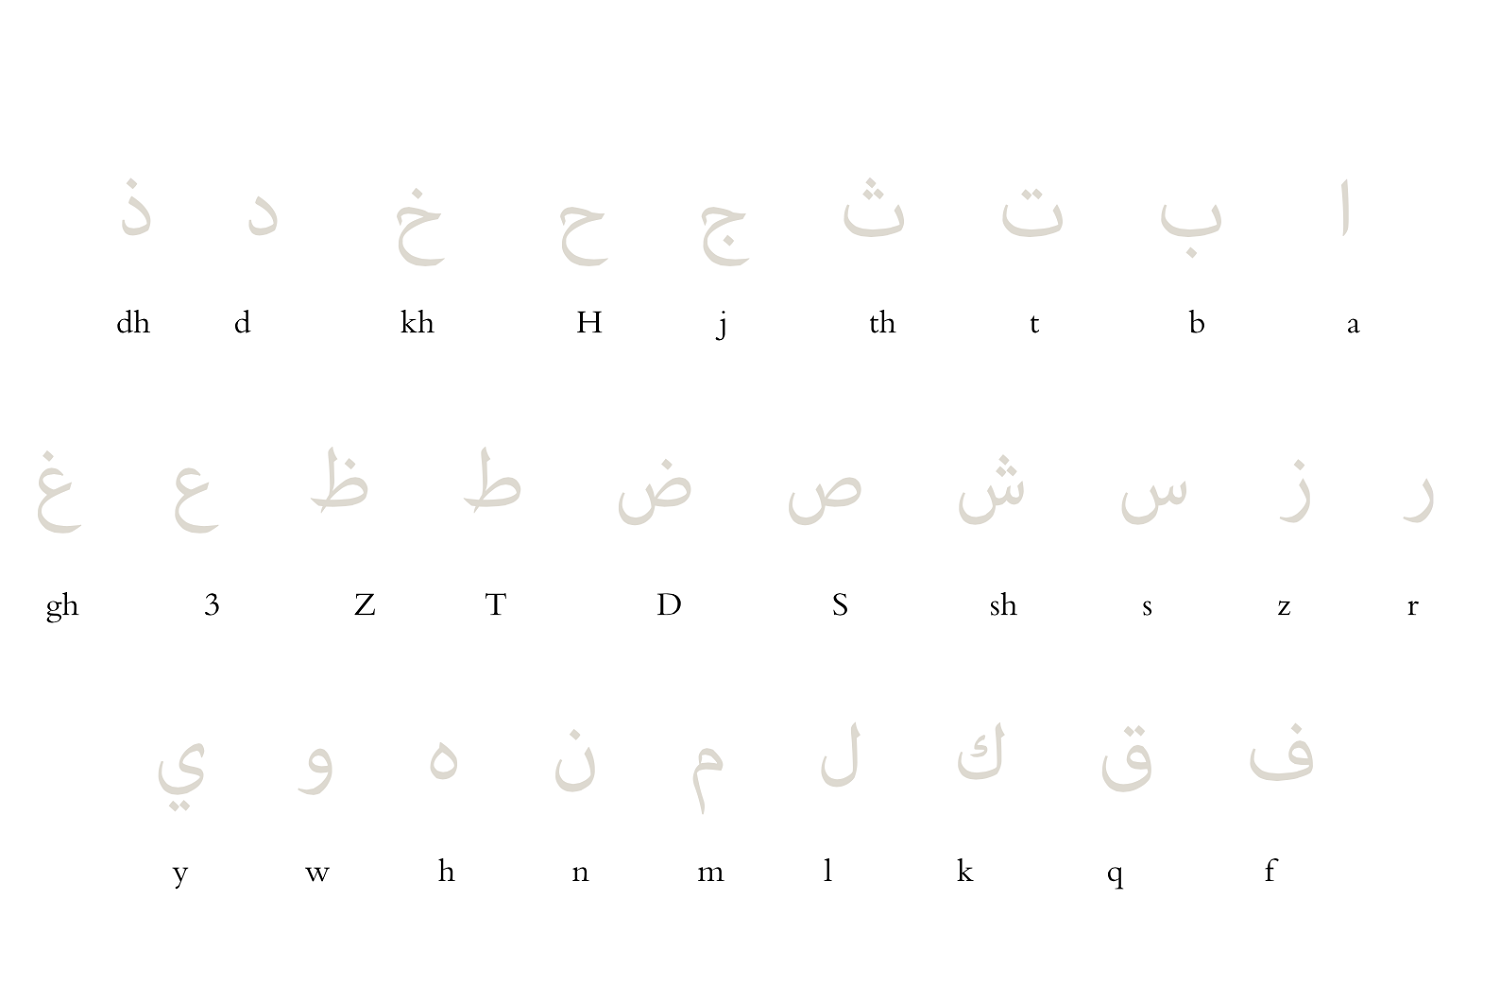 Arabic Alphabet Worksheets | Activity Shelter